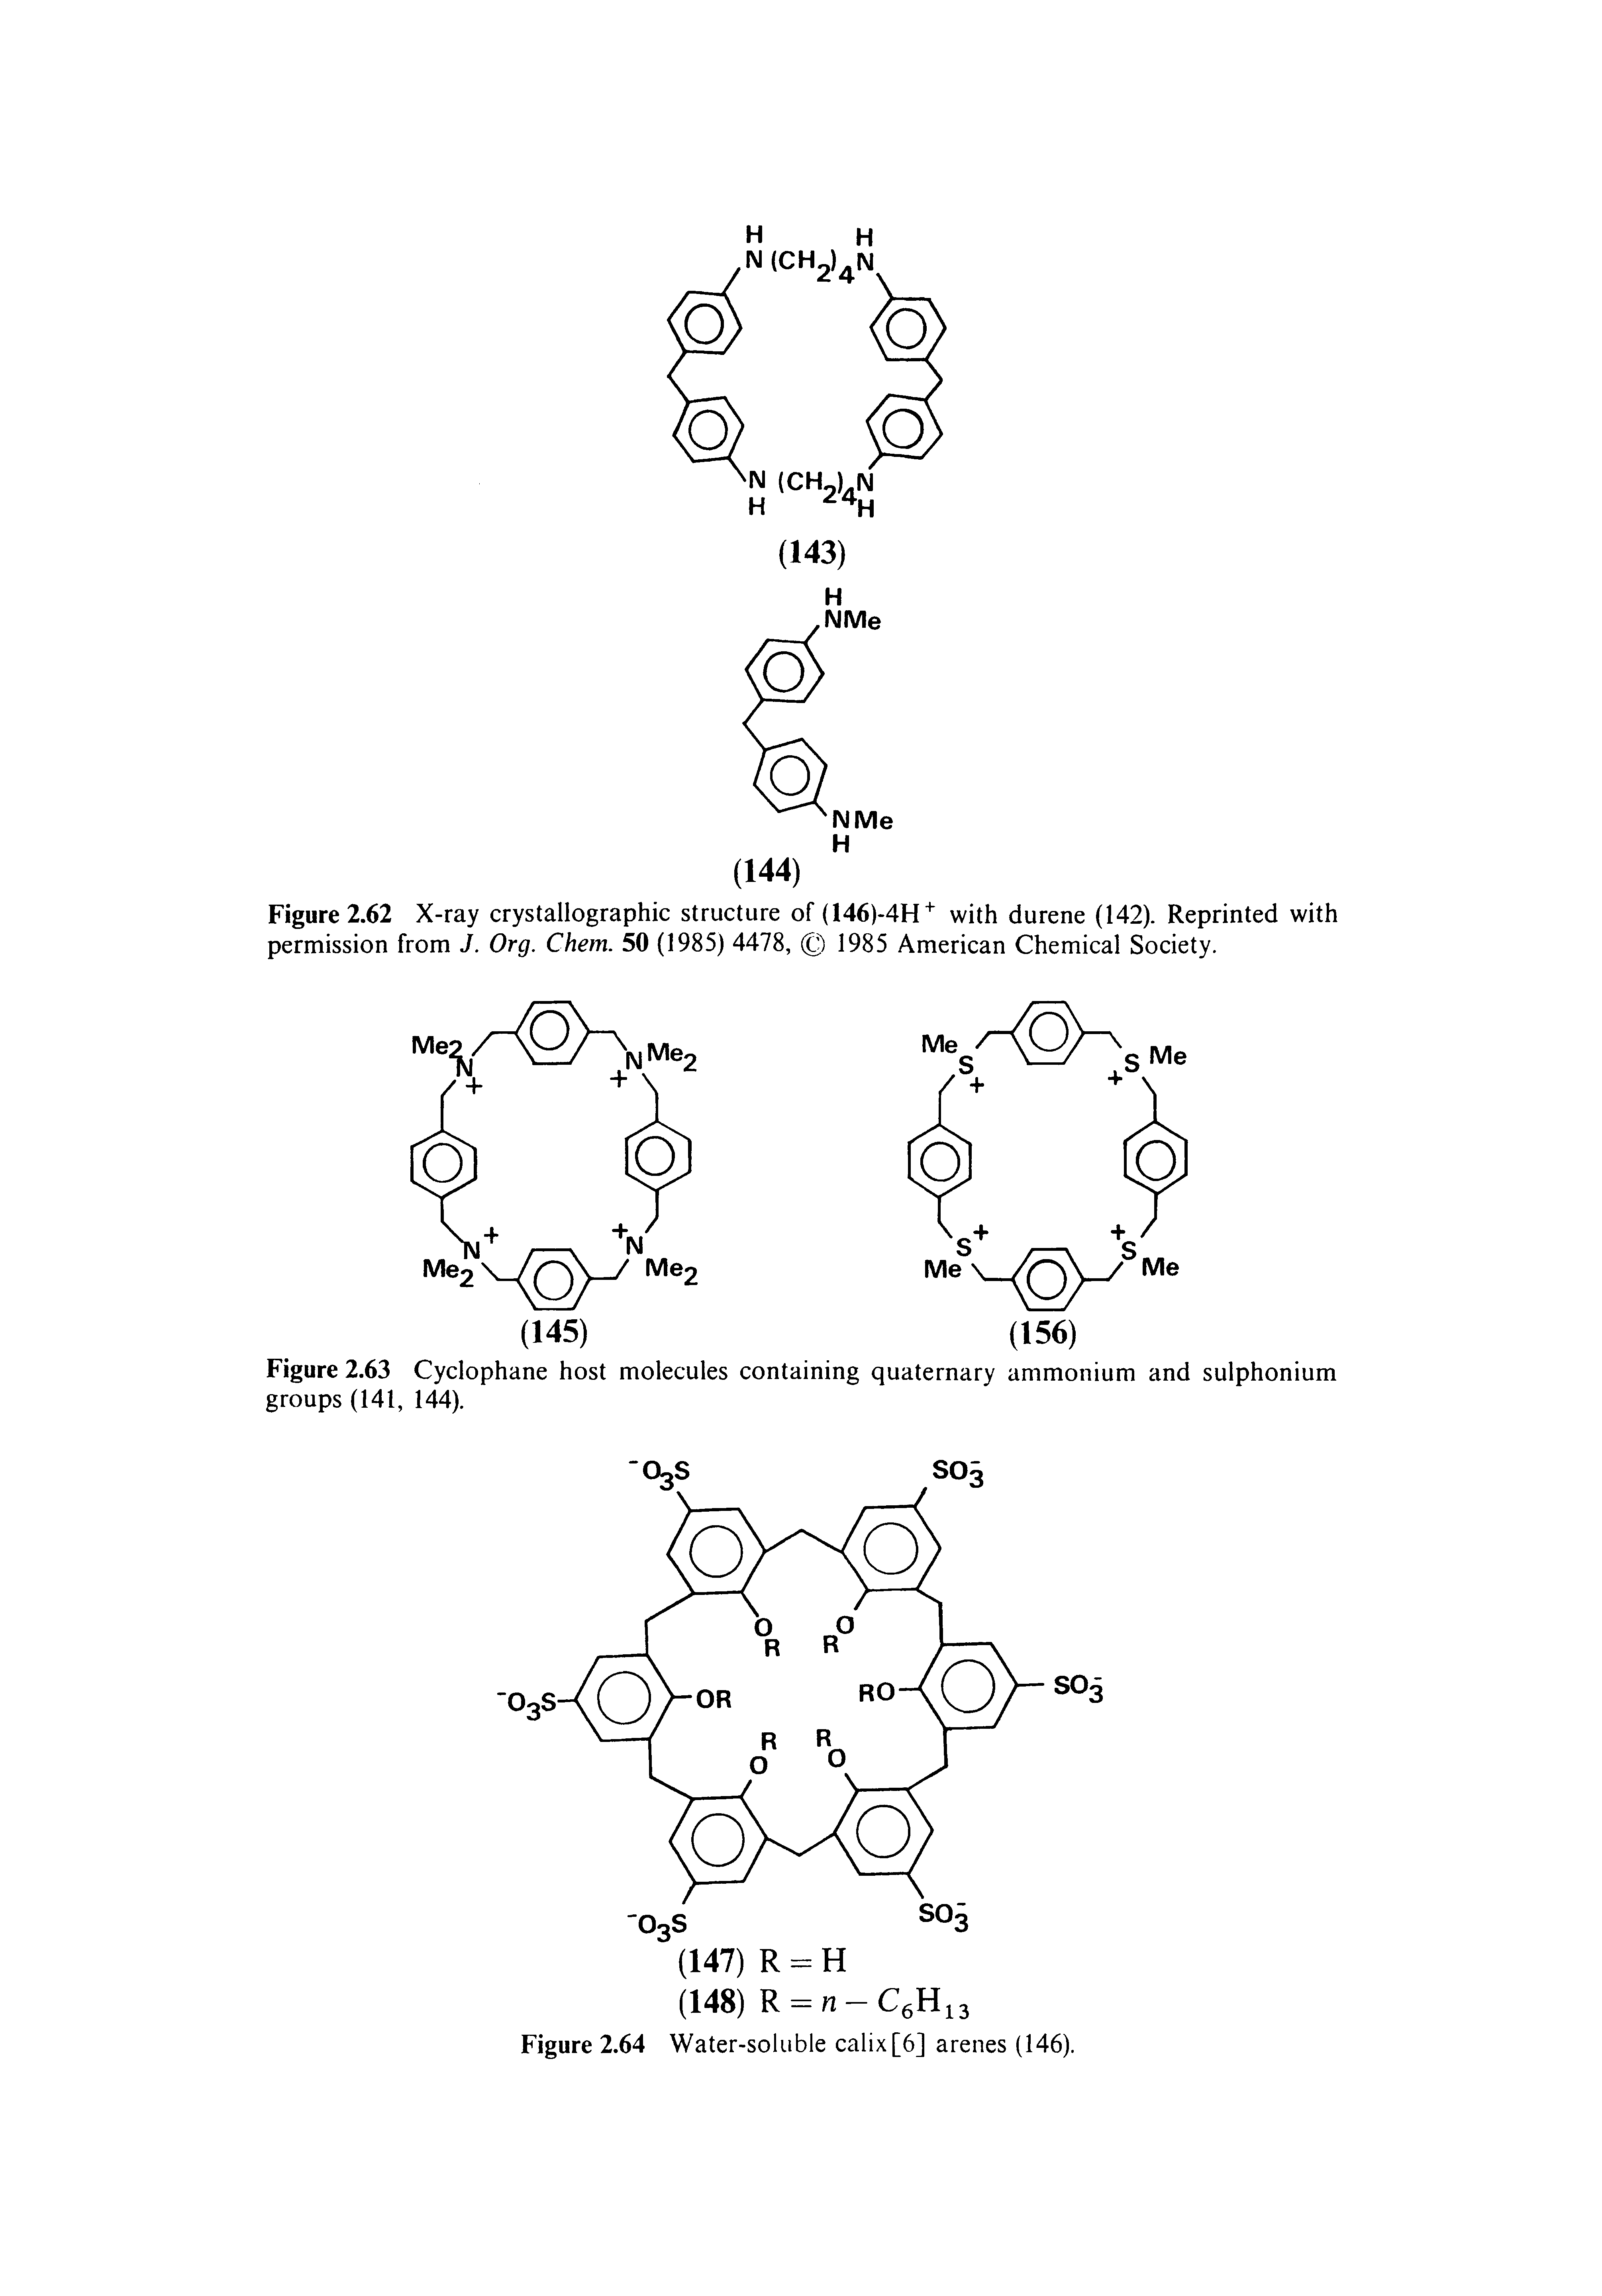 Figure 2.63 Cyclophane host molecules containing quaternary ammonium and sulphonium groups (141, 144).